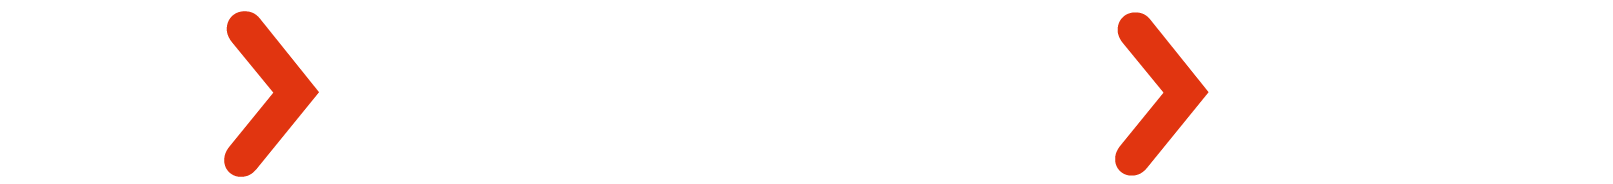 PIXIO and PIXEM logos